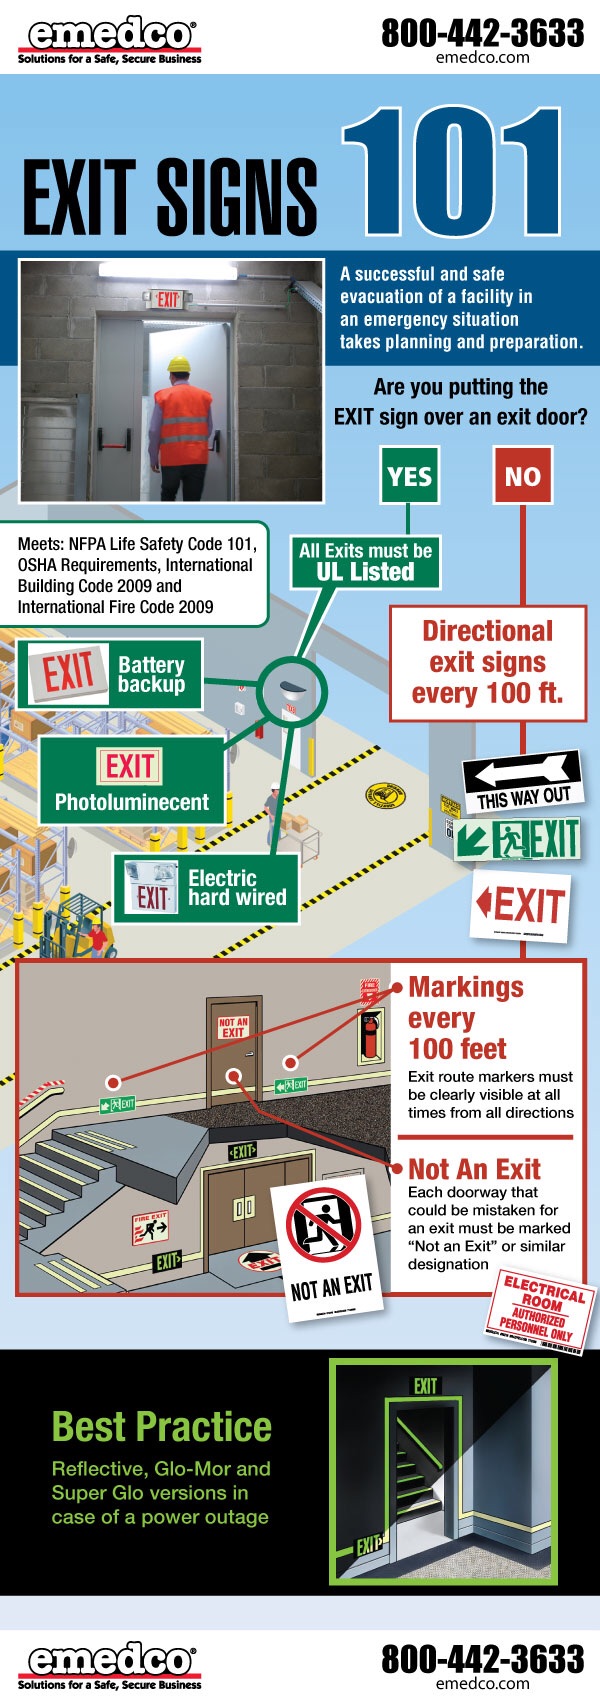 Emergency Lighting: Best Practices Guide